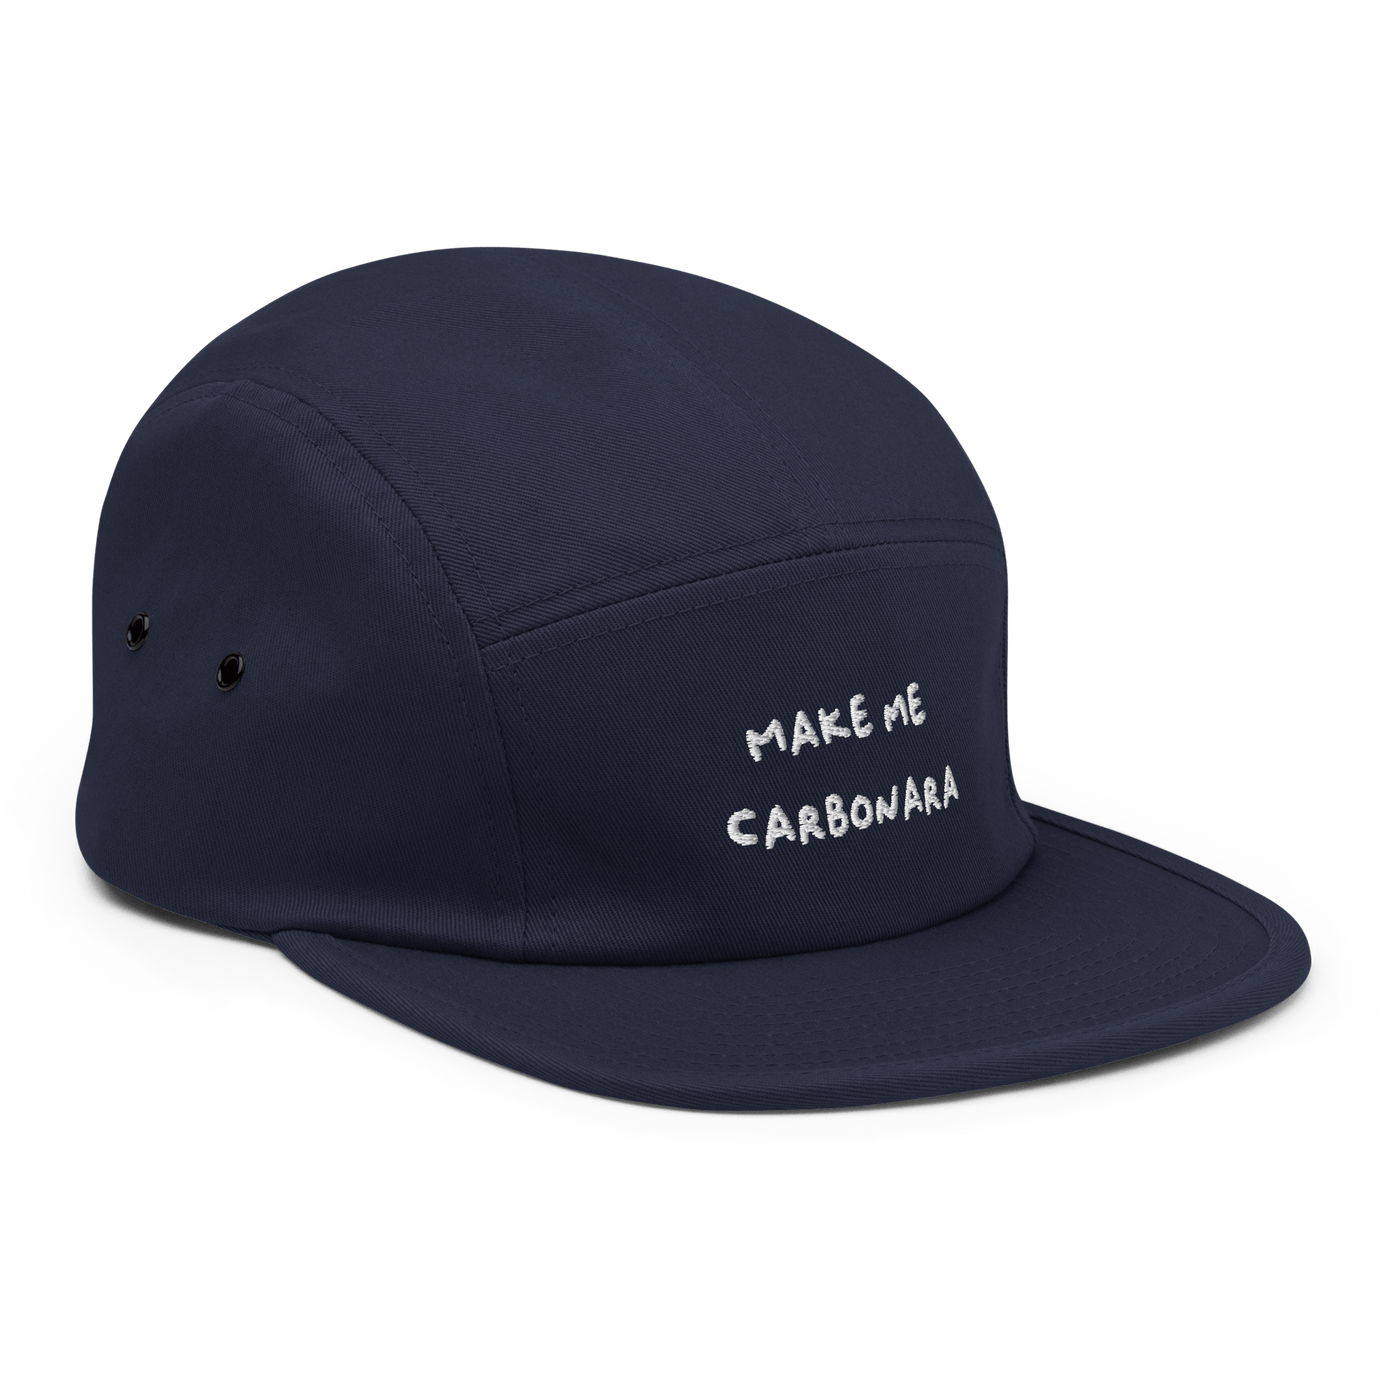 Make me Carbonara Five Panel Hat - Navy - - Just Another Cap Store